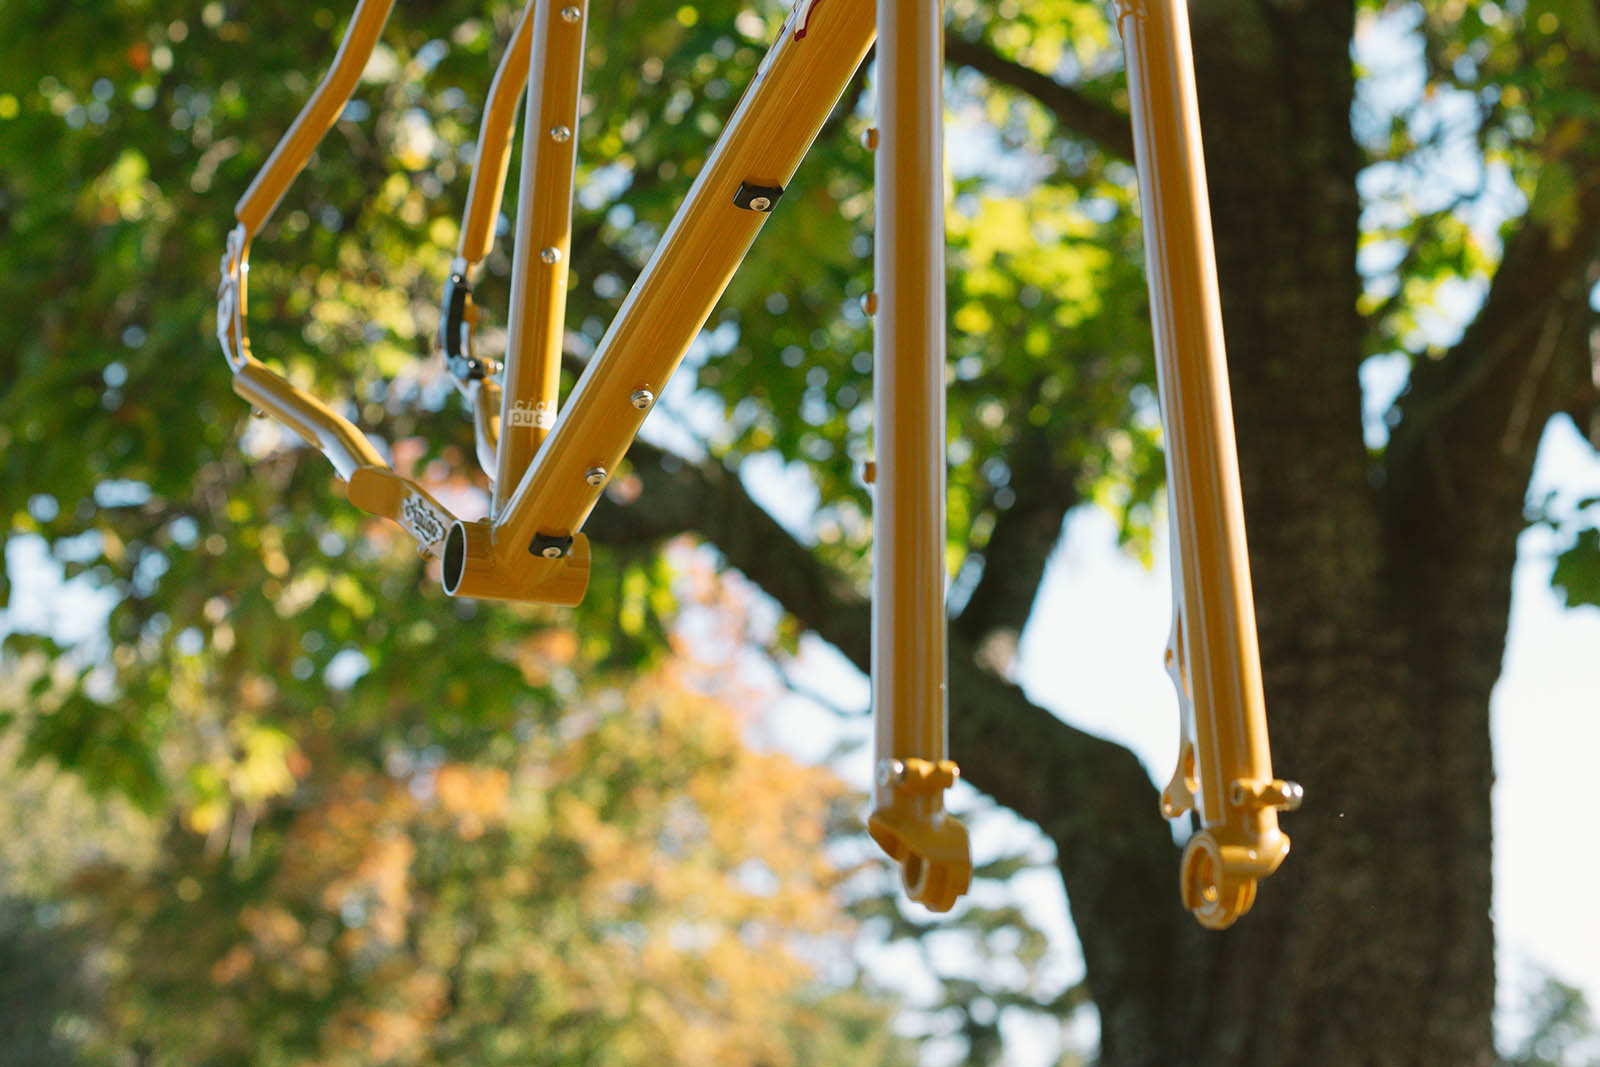 an amigo frameworks frame suspended from a tree